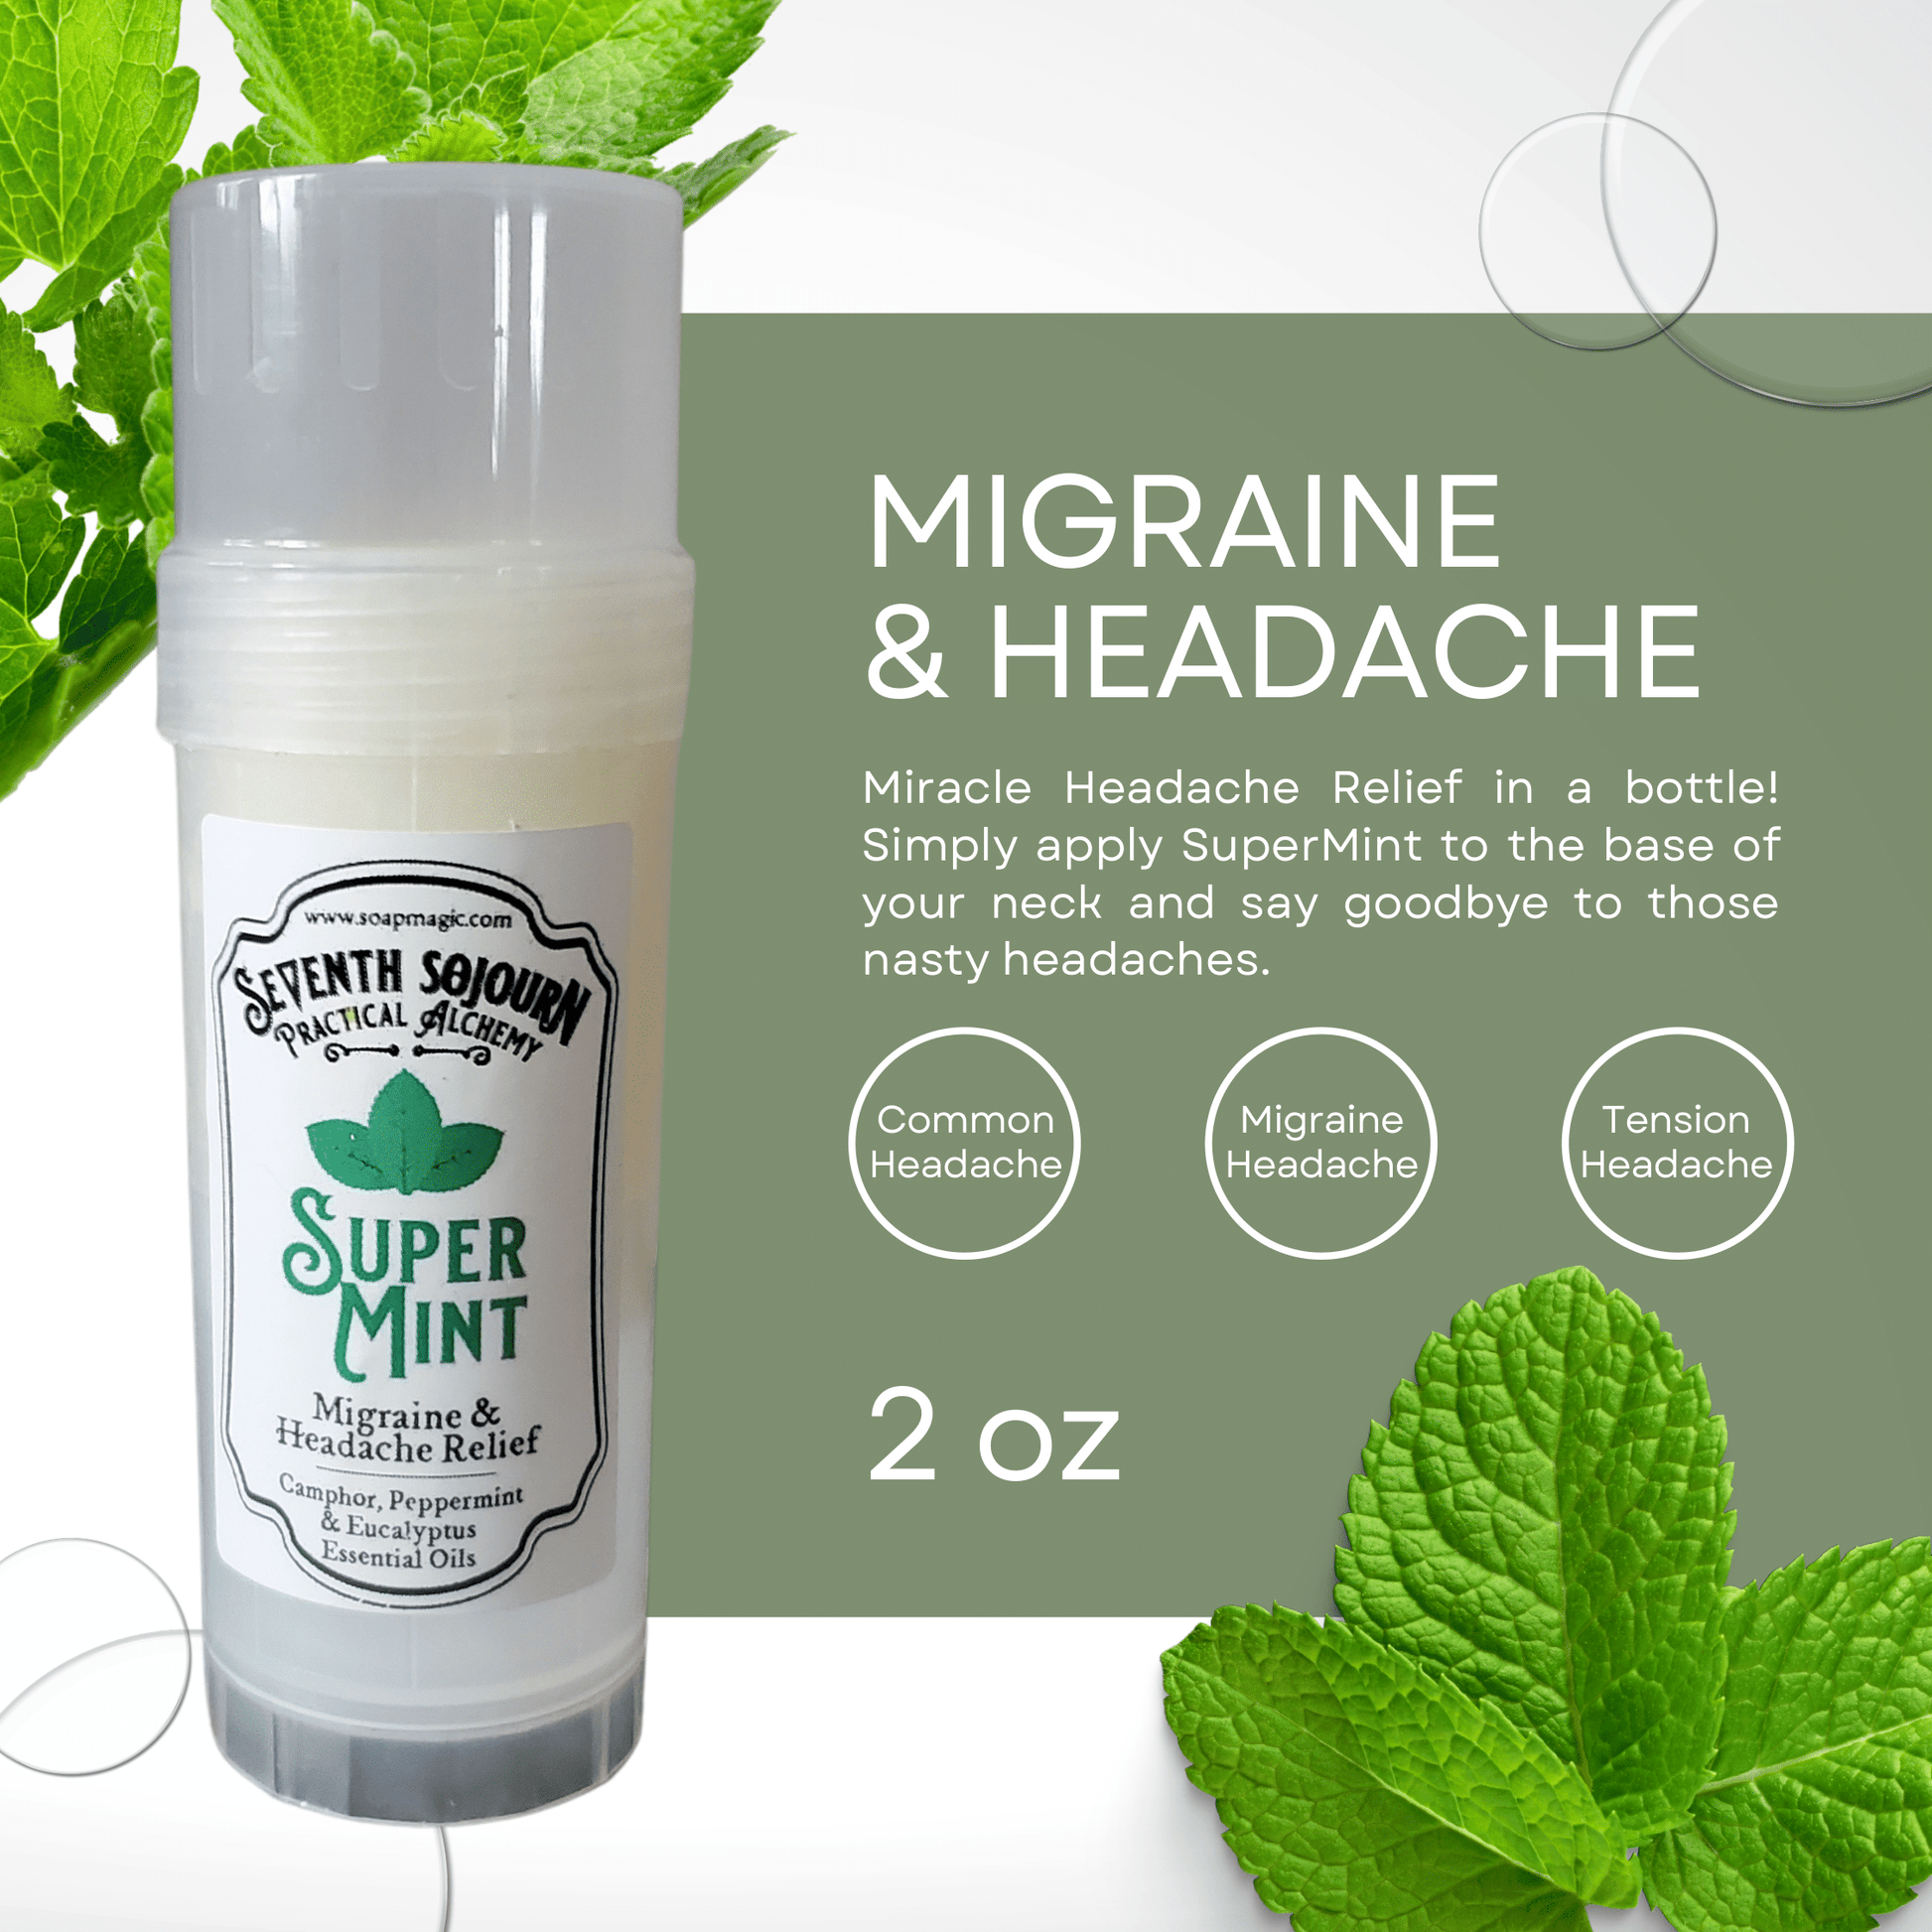 Super Mint Migraine & Headache Relief